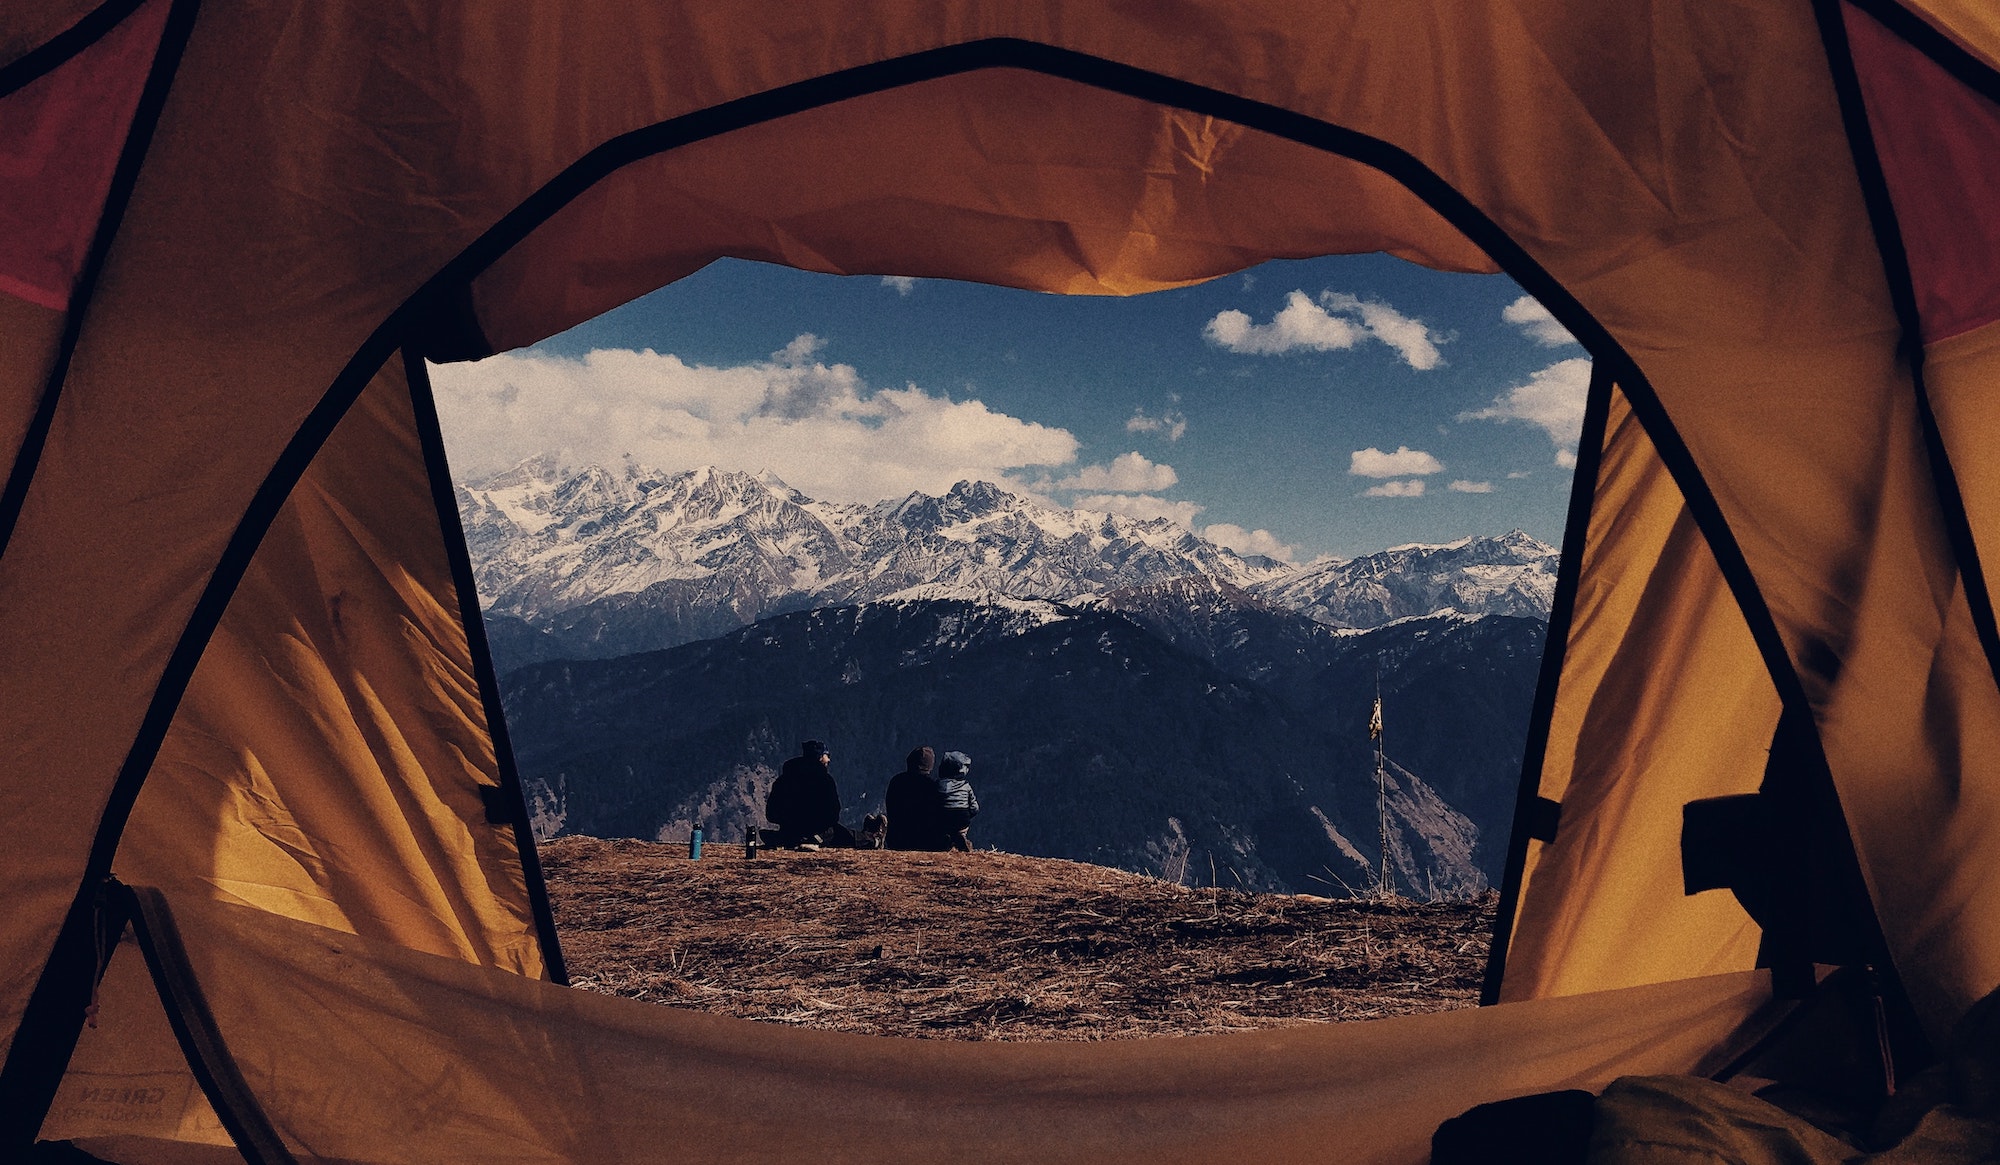 Winter tent campspace